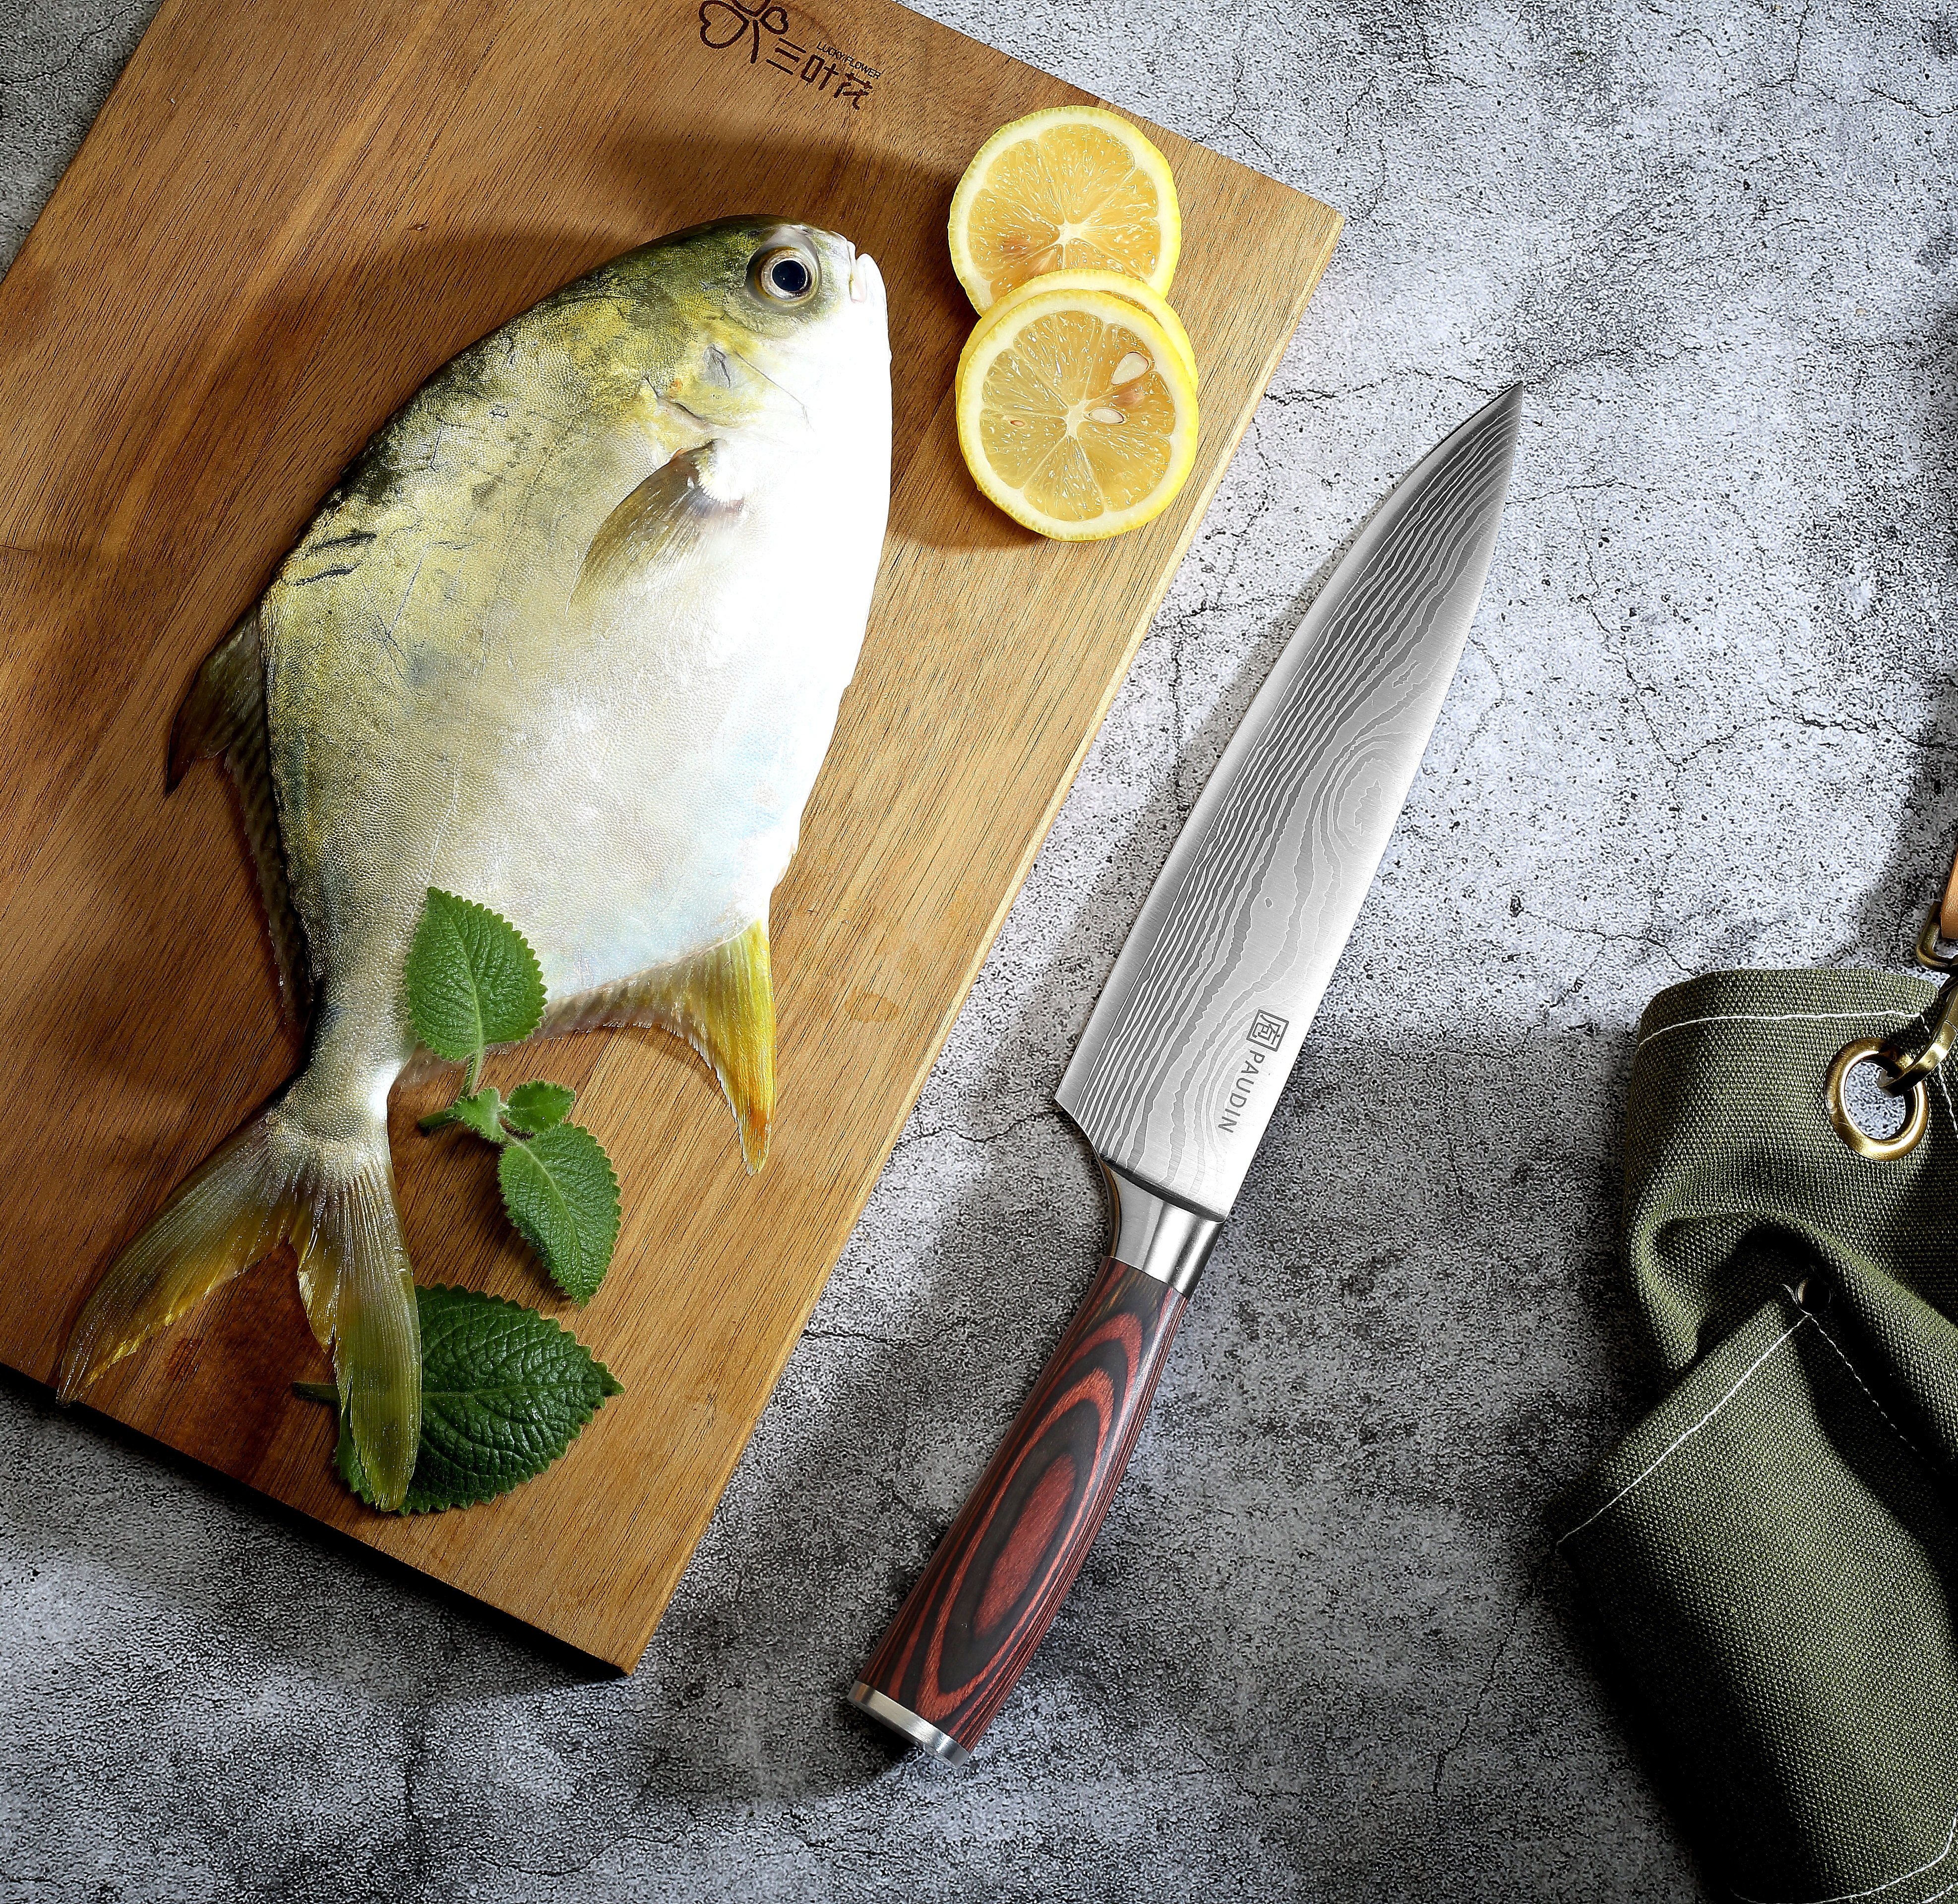 Paudin Universal 8-inch Chef's Knife